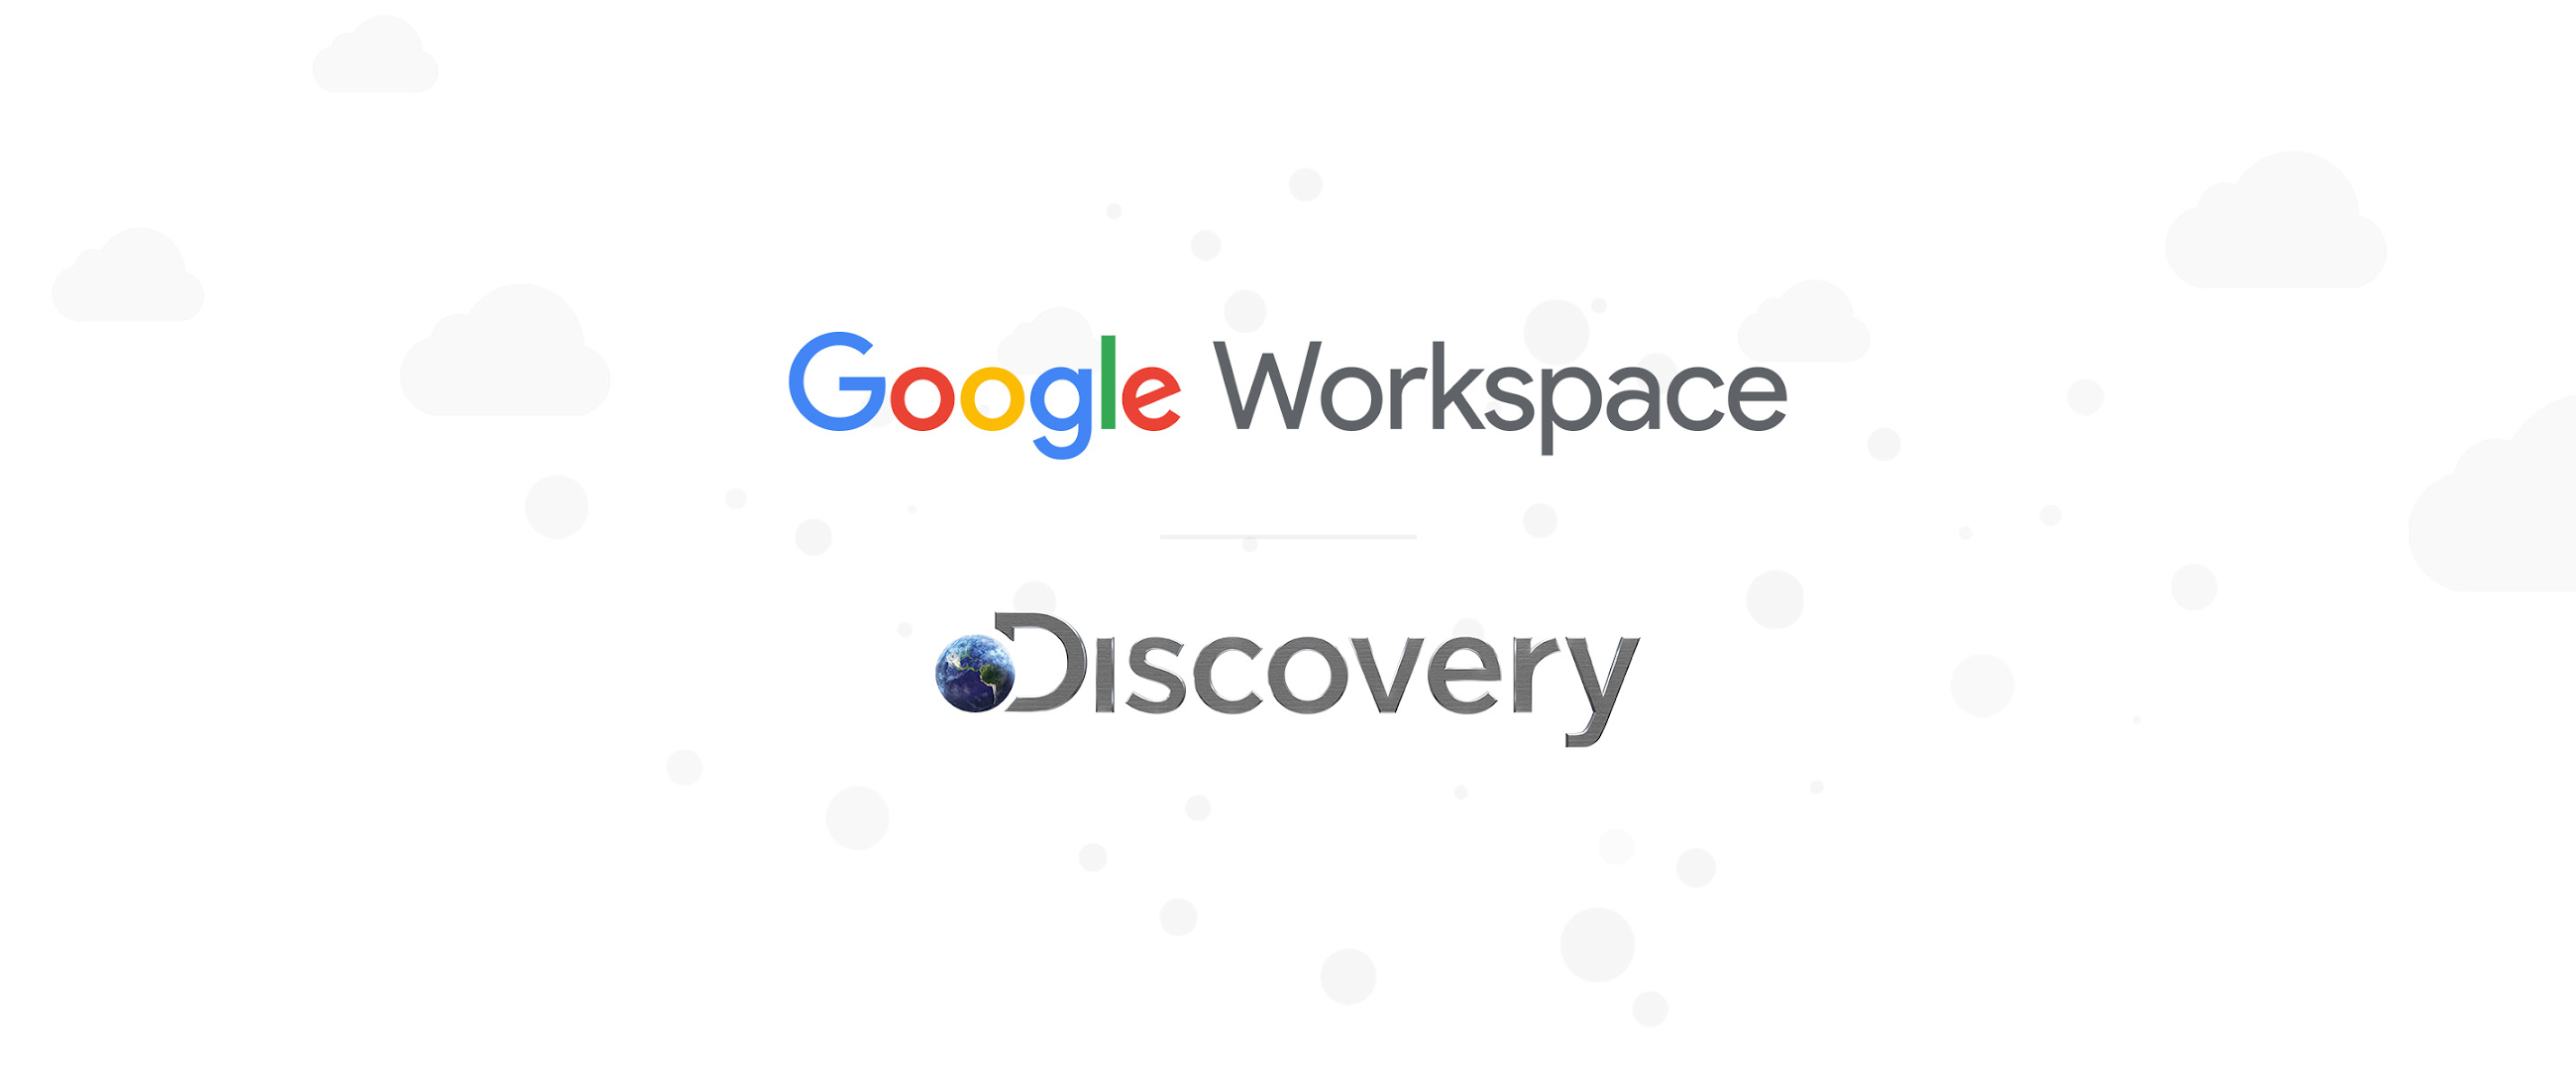 https://storage.googleapis.com/gweb-cloudblog-publish/images/workspace_x_discovery_1.max-2600x2600.jpg